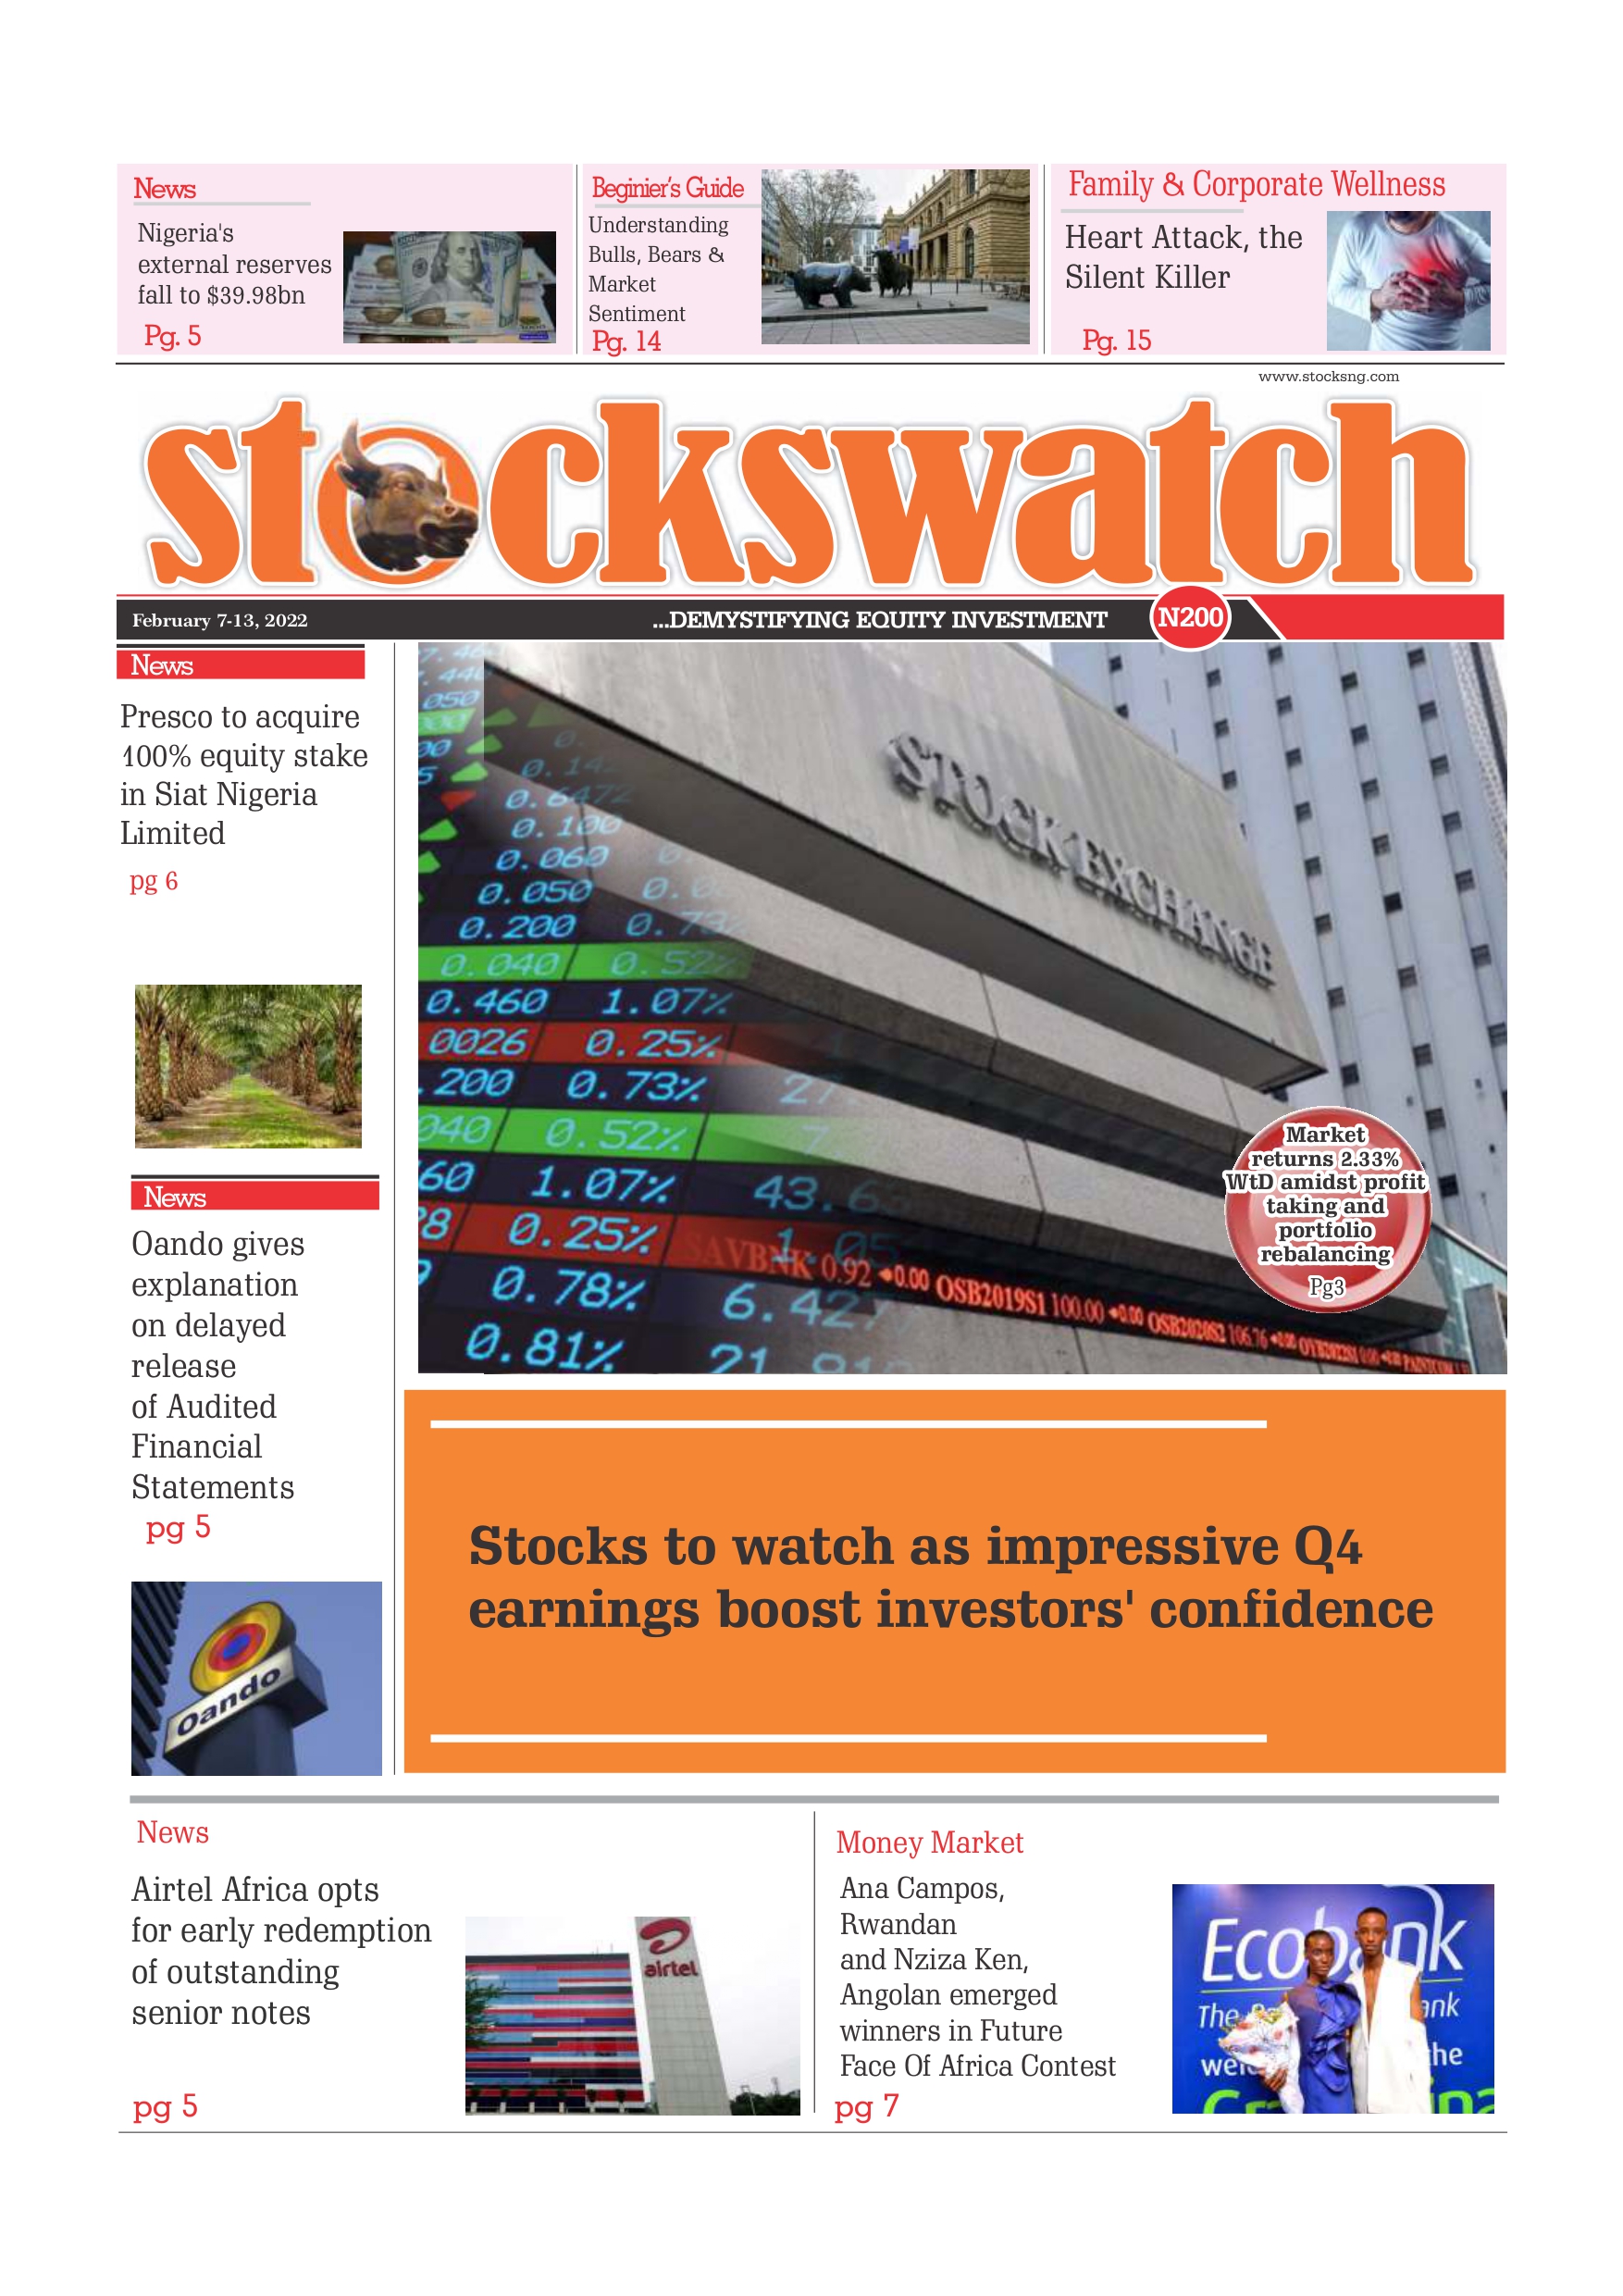 Stockswatch e-paper: February 7-13, 2022